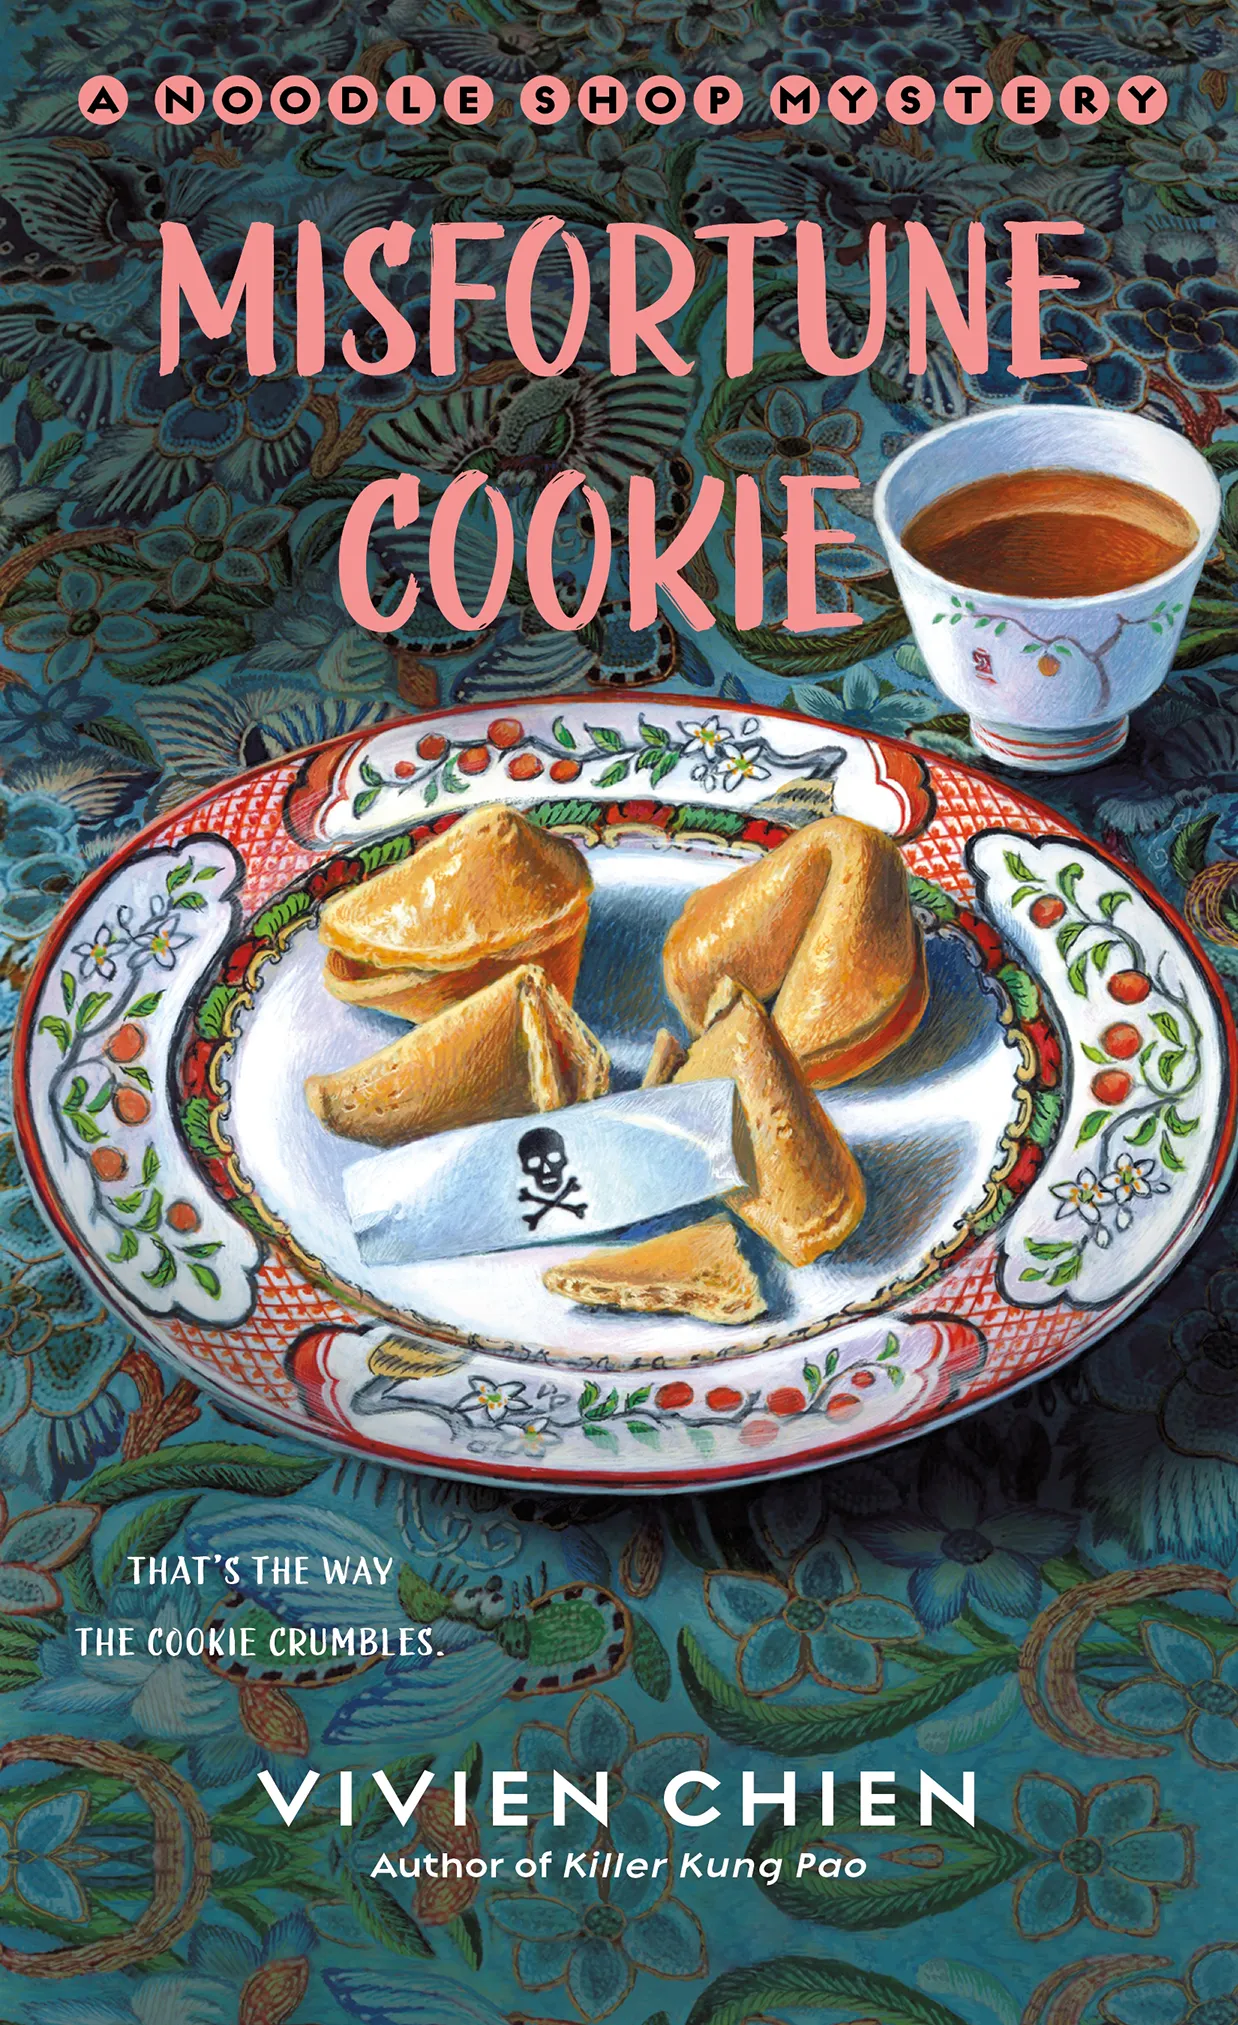 Misfortune Cookie (A Noodle Shop Mystery #9)